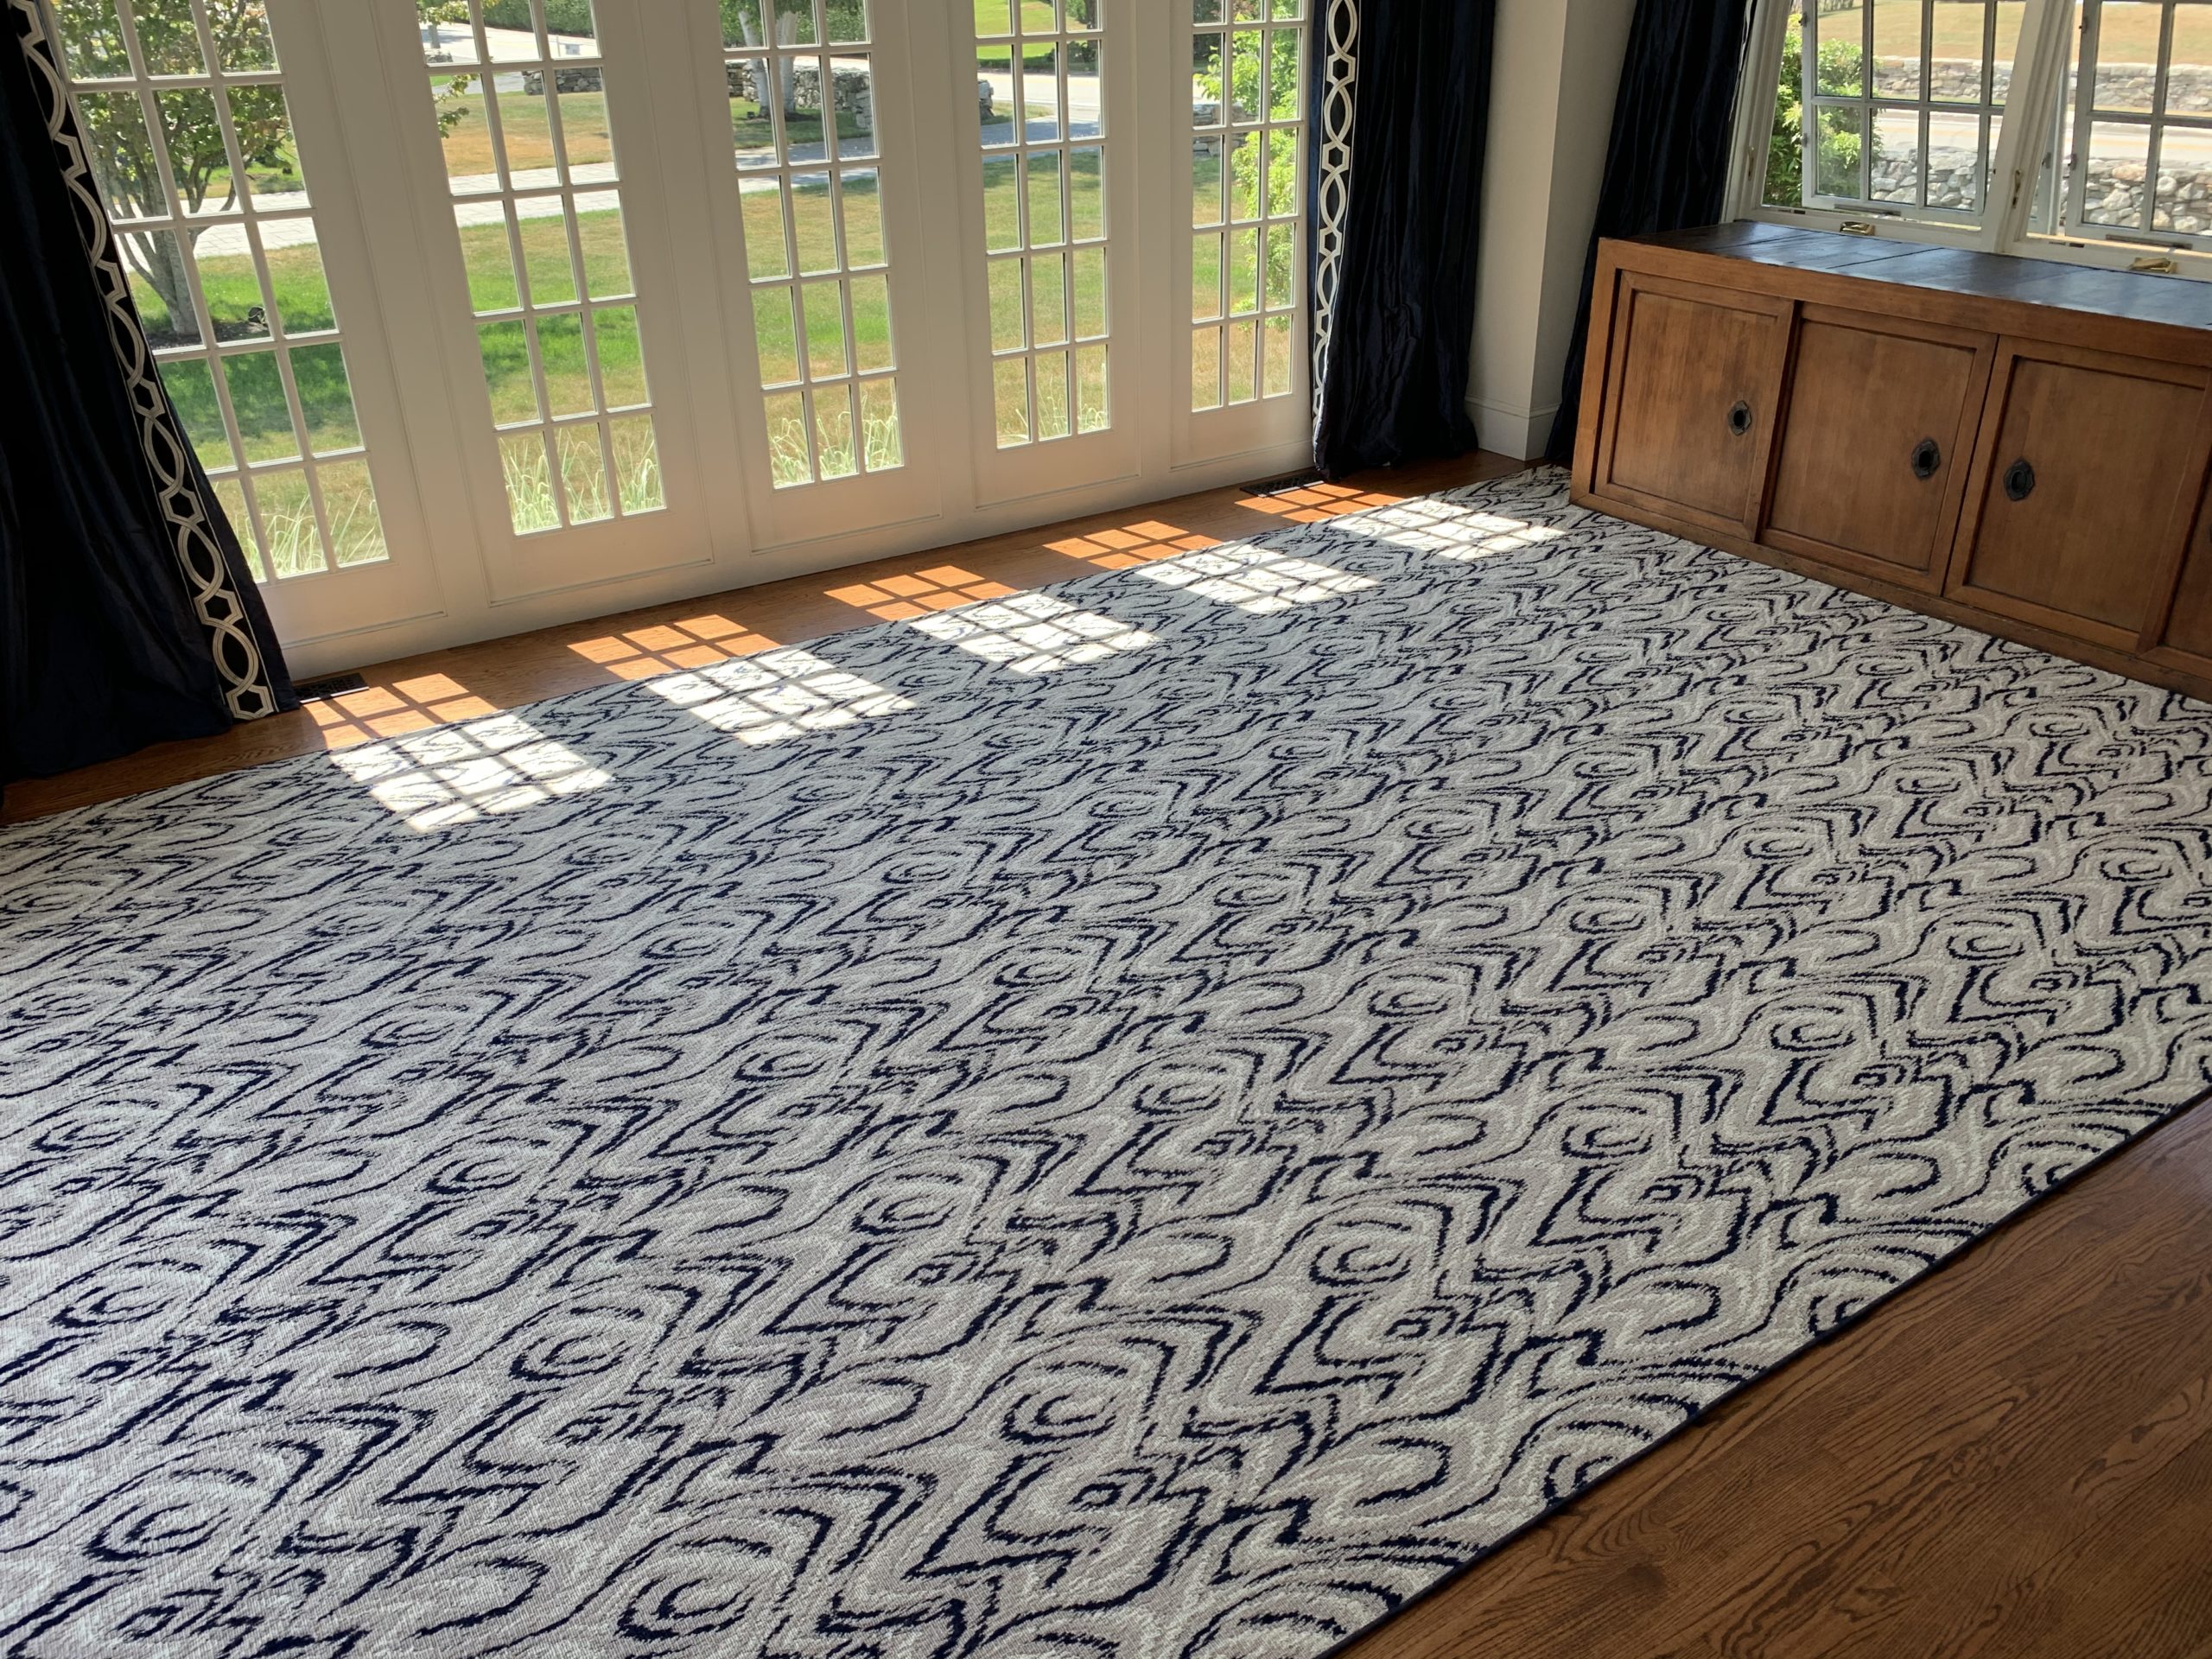 Area-rugs-window